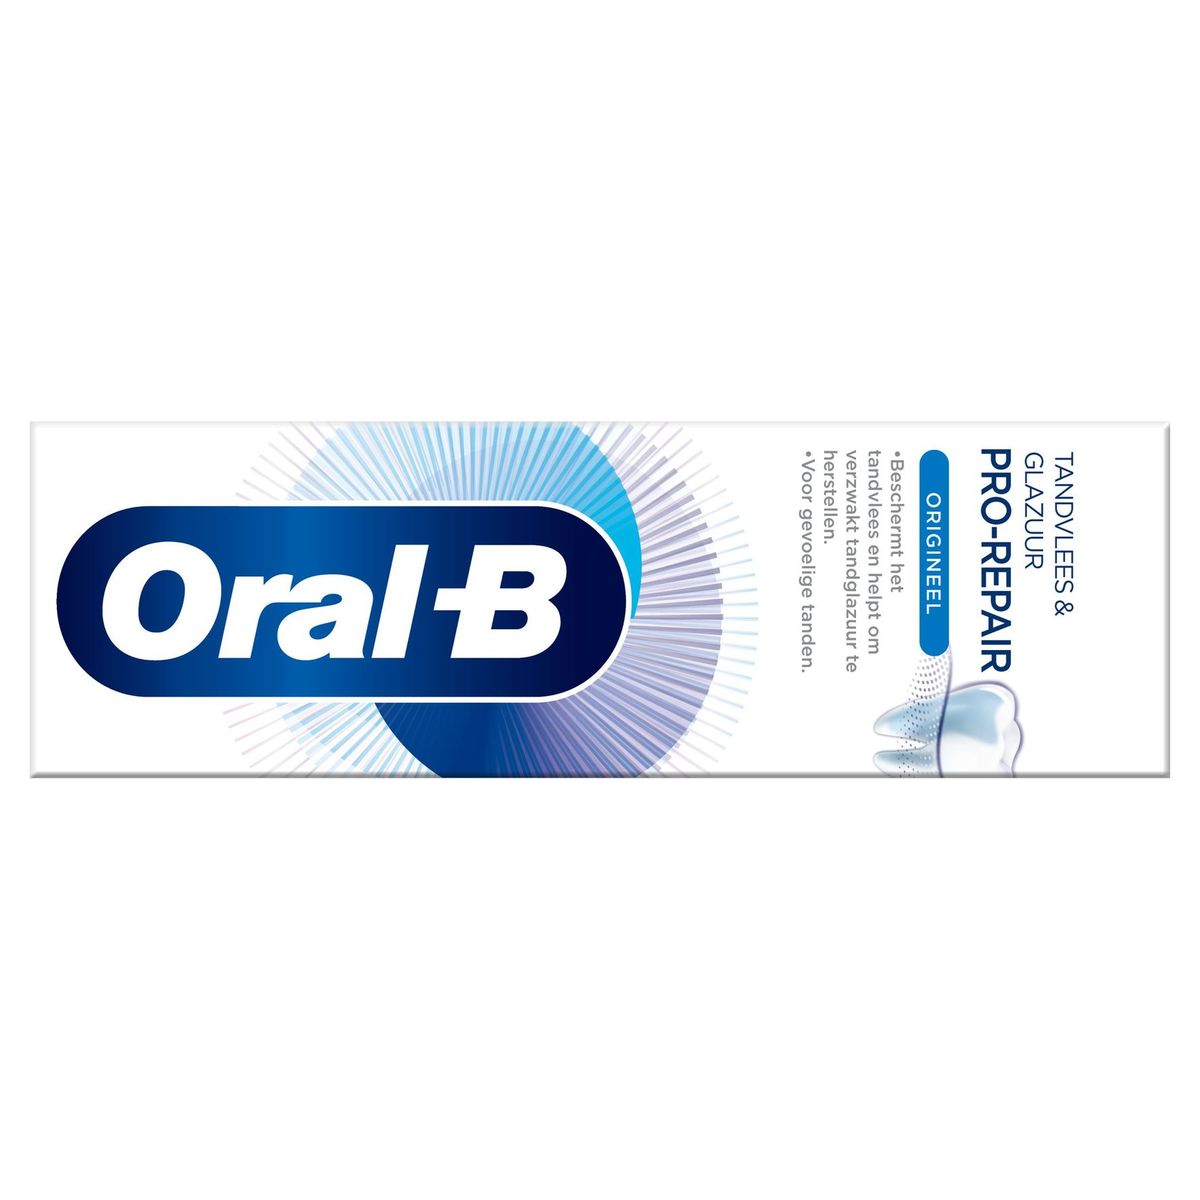 Dentifrice Oral-B Pro-Repair Gencives et Émail 75 ml